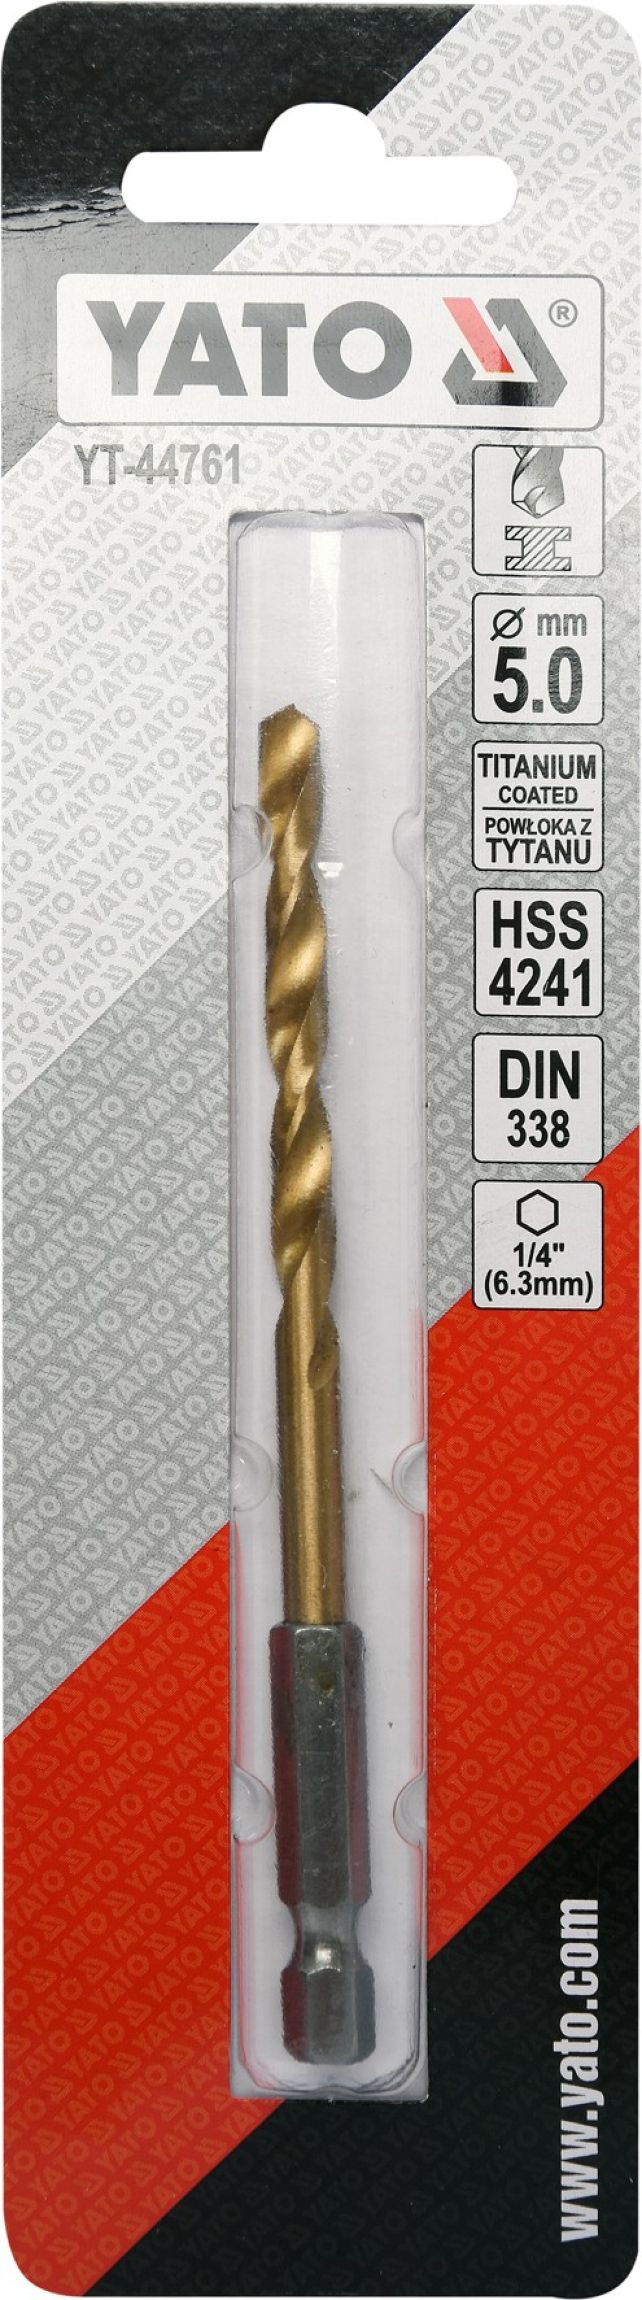 Vrtk do kovu HSS-titan 13,0mm se estihranou stopkou 1/4" Yato YT-44776